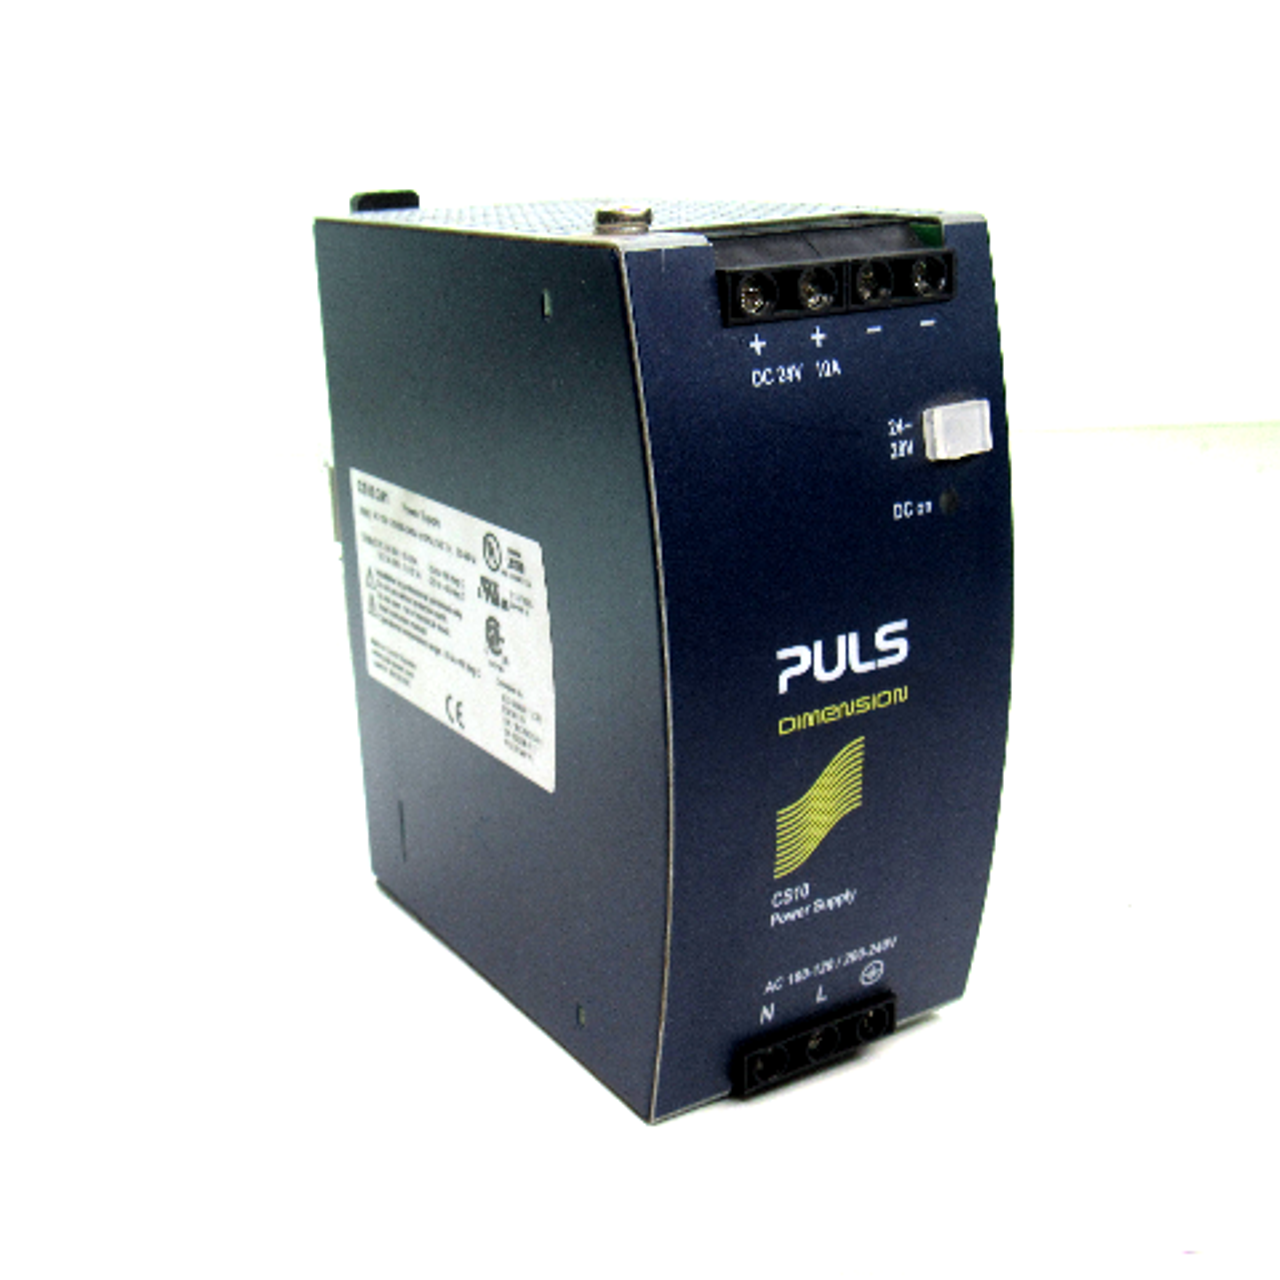 Puls Dimension CS10.241 DIN Rail Power Supply, 24V, 10A, 50/60 Hz